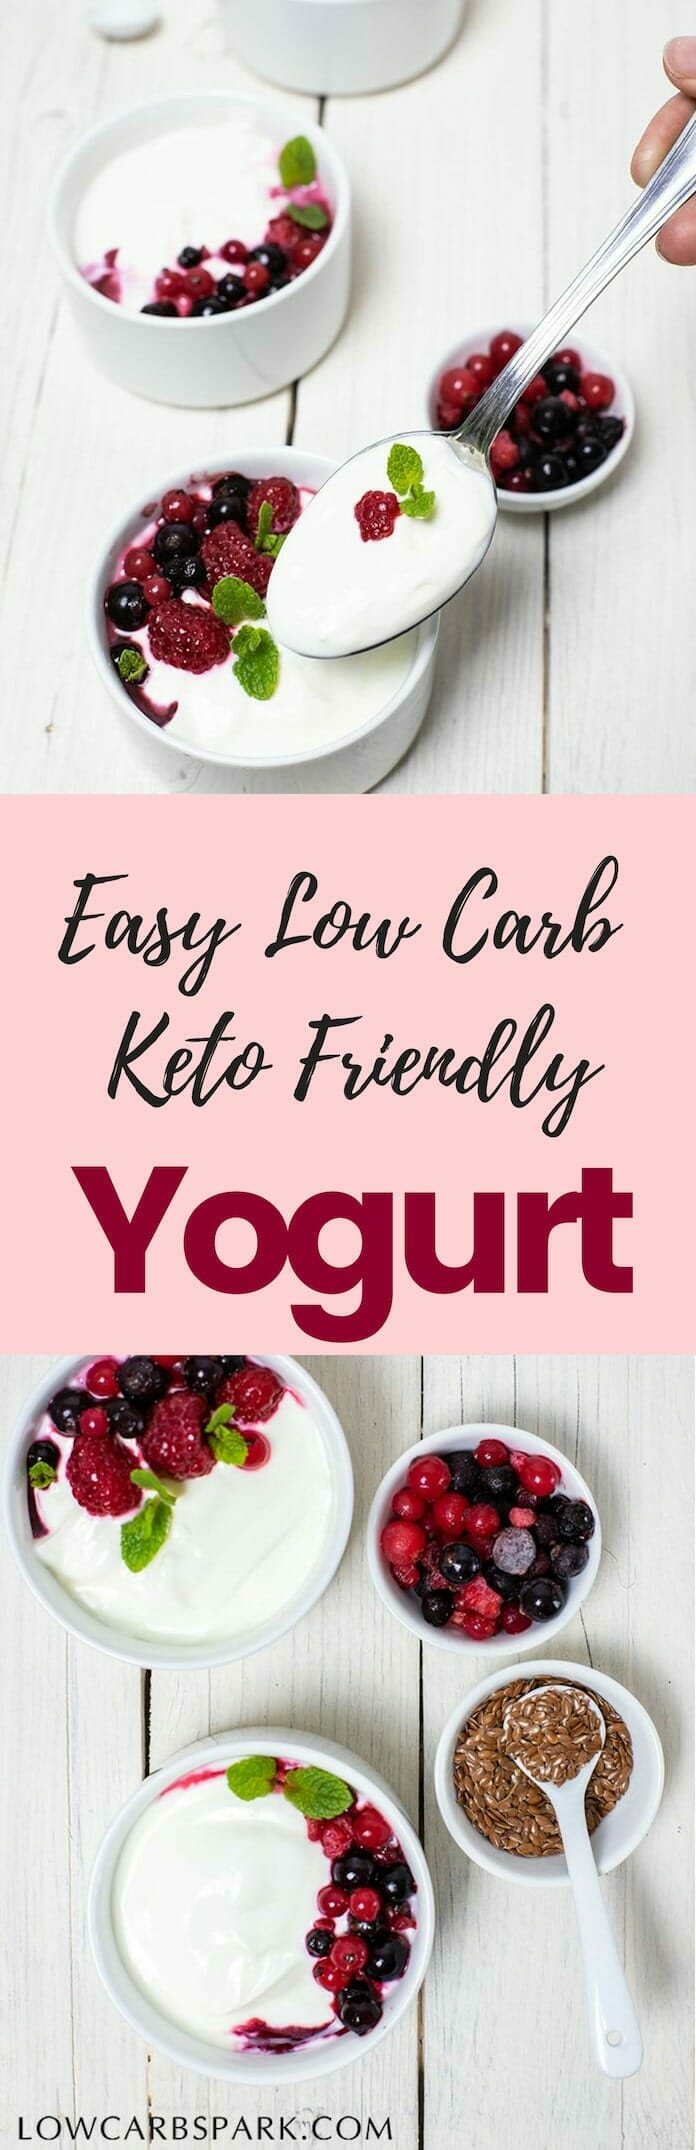 2 Ingredients Low Carb Yogurt - Keto Friendly